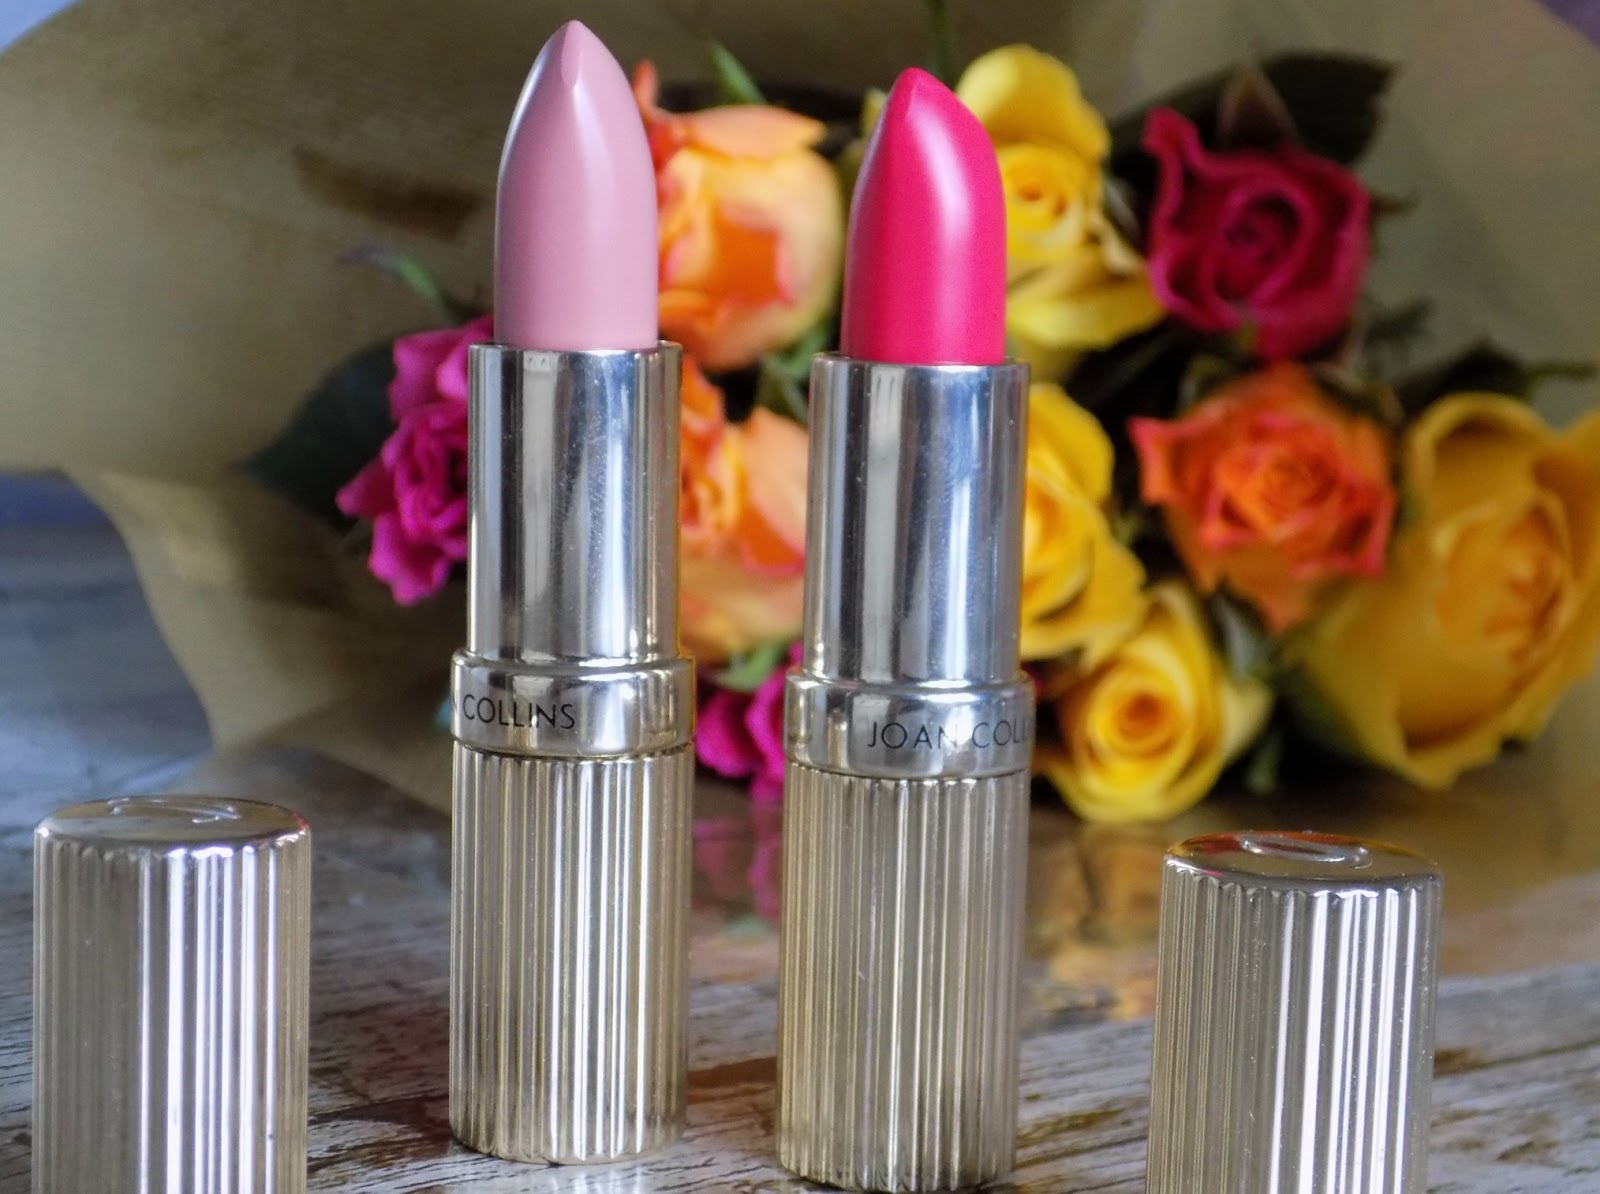 Joan Collins beauty divine lips review 